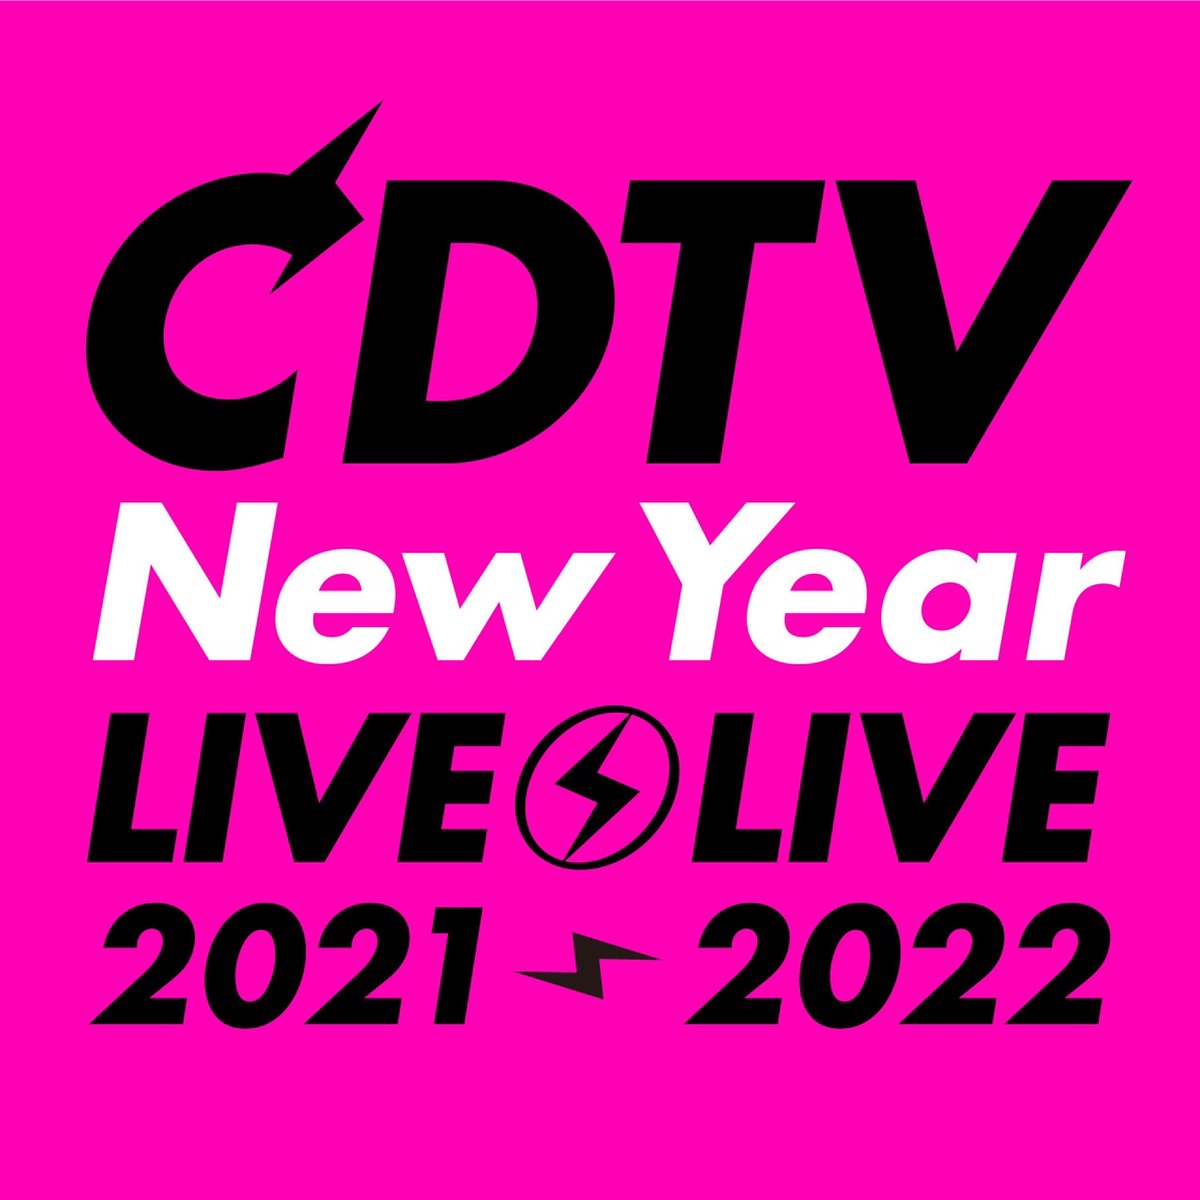 12/31(⾦) 23:45-5:00
#TBS「CDTV ライブ！ライブ！ 年越しスペシャル！2021→2022」

BE:FIRST 出演決定

🔗

#BEFIRST 
#CDTV
#CDTVライブライブ
@TBSCDTV 